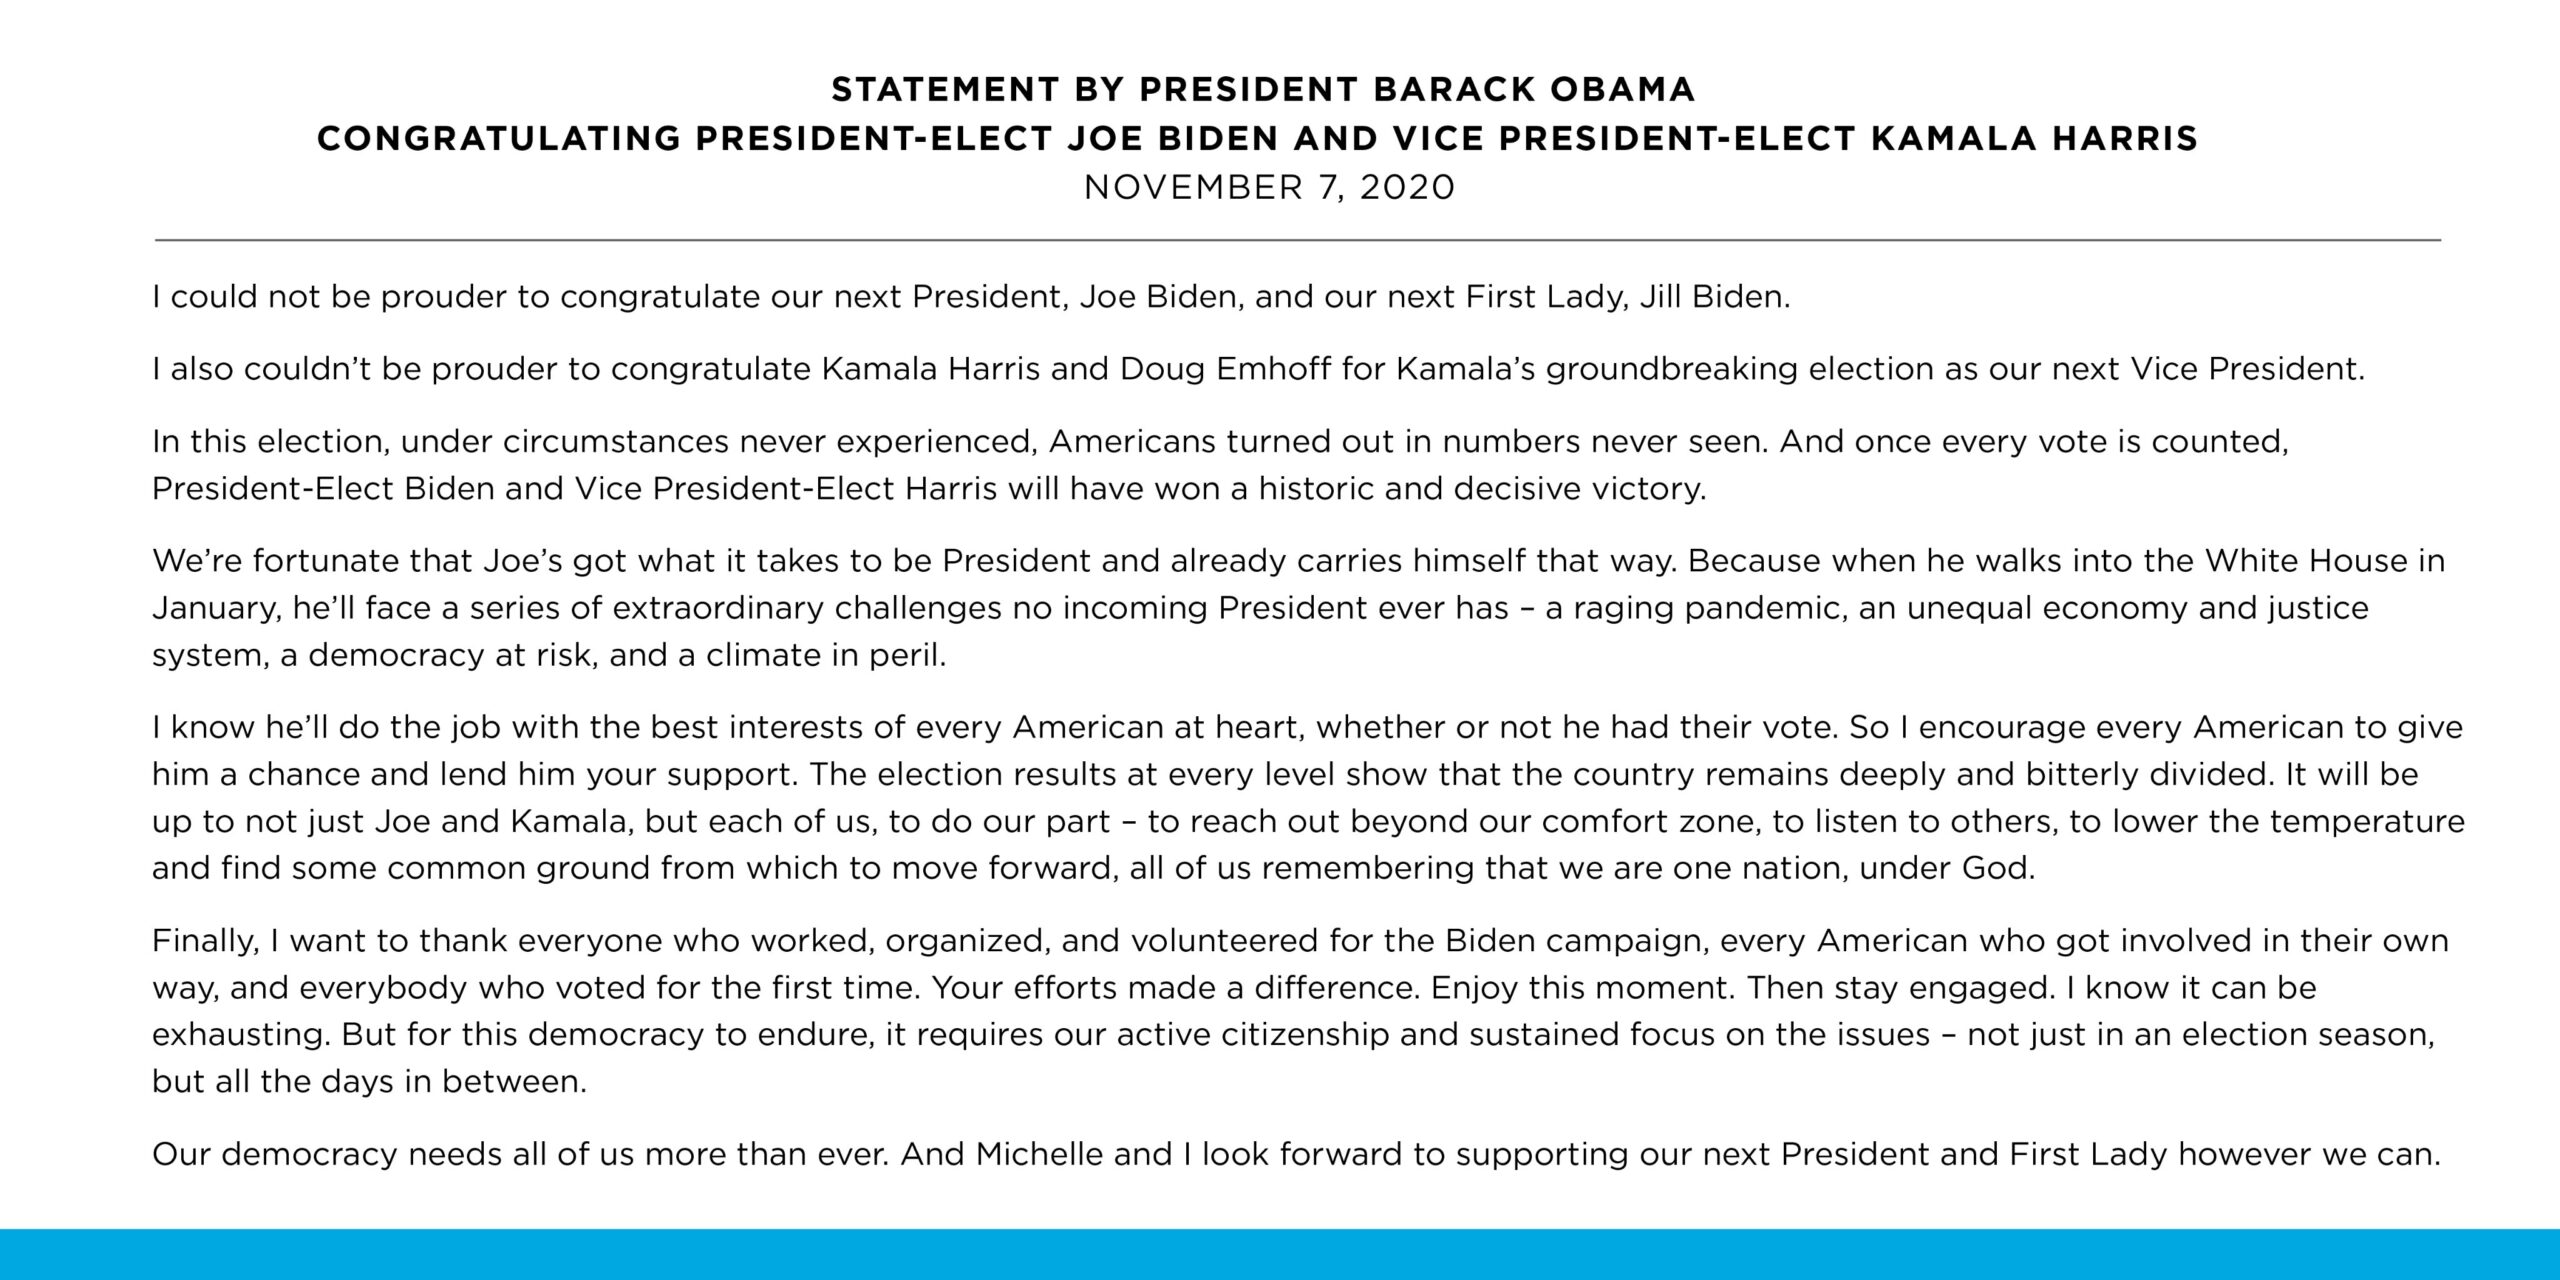 Obama congradulate Joe Biden on winning US election